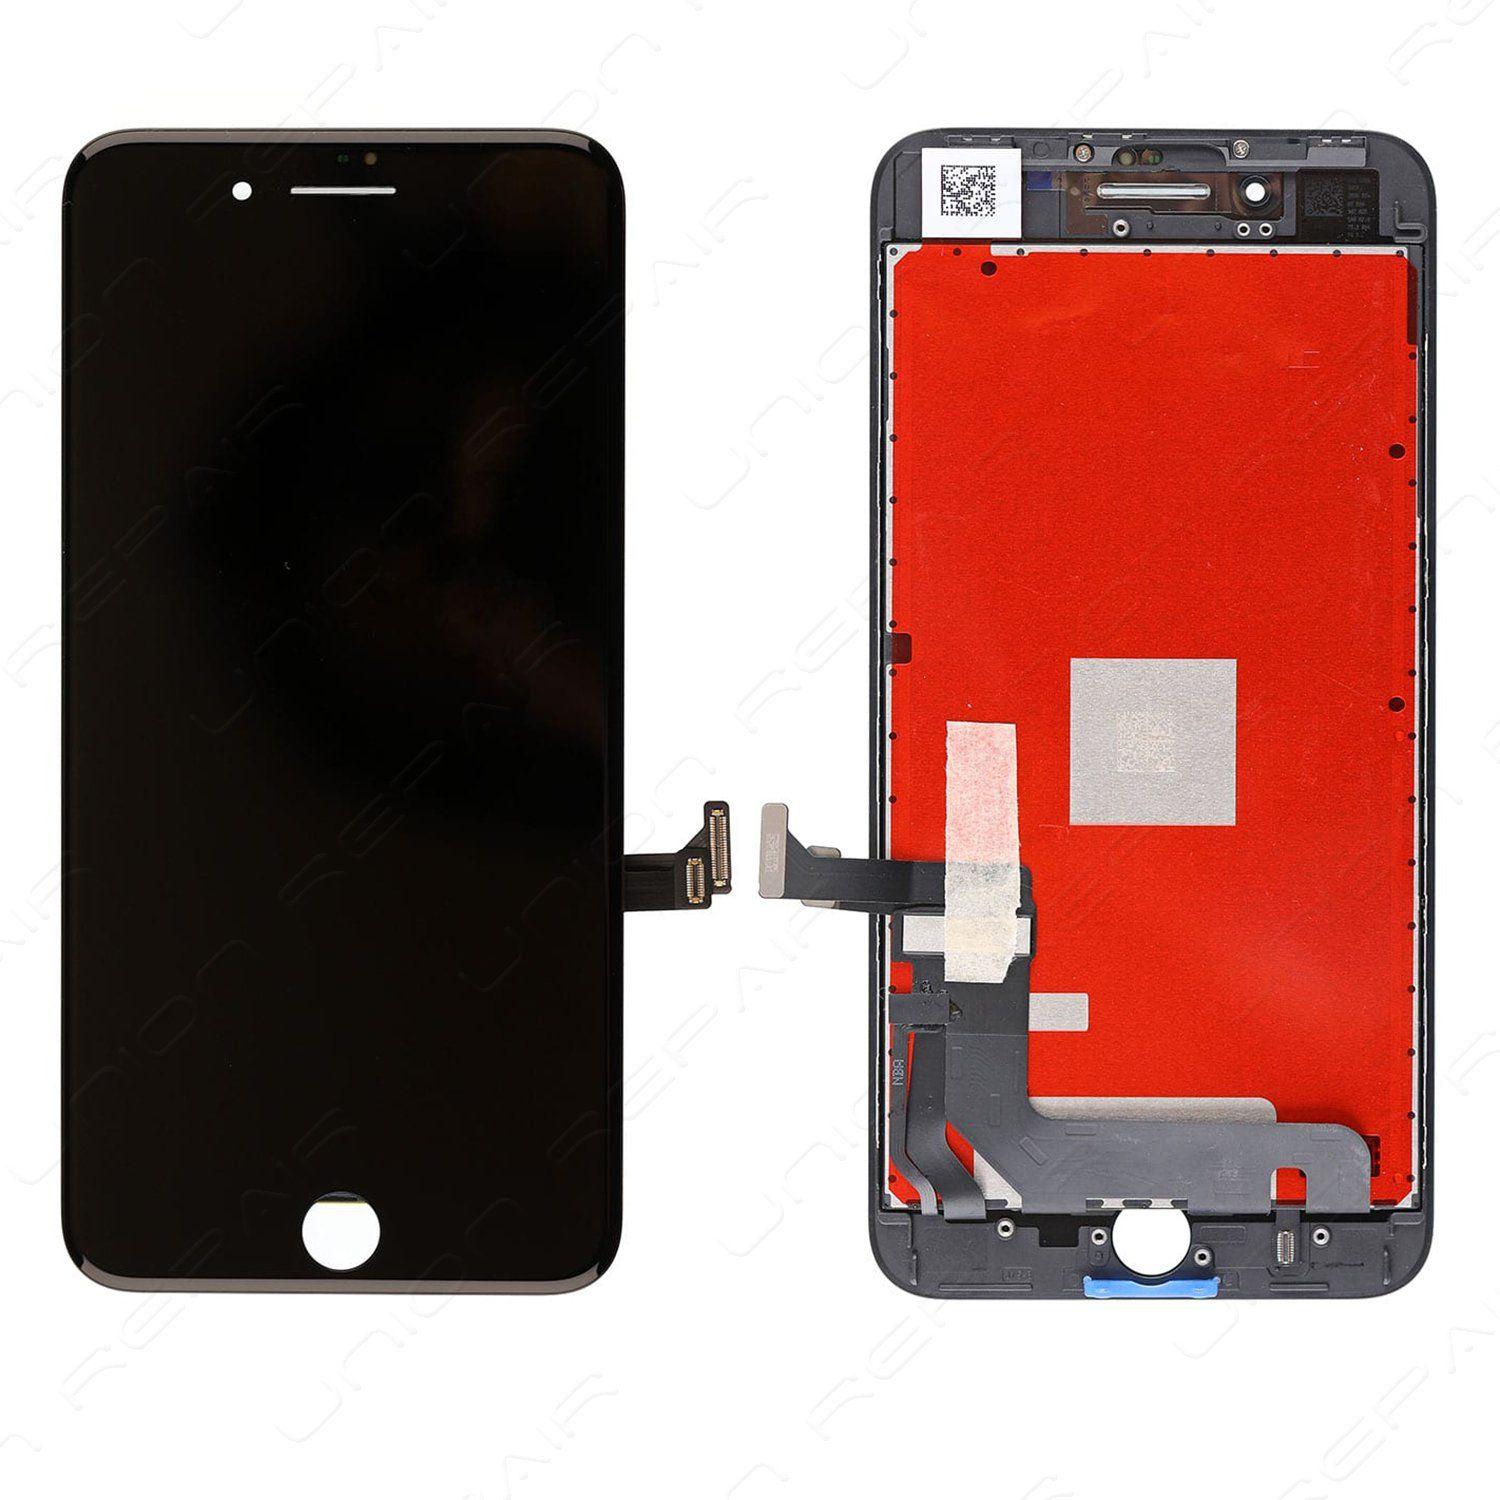 Original LCD + touch screen iPhone 8 Plus black (refurbished)